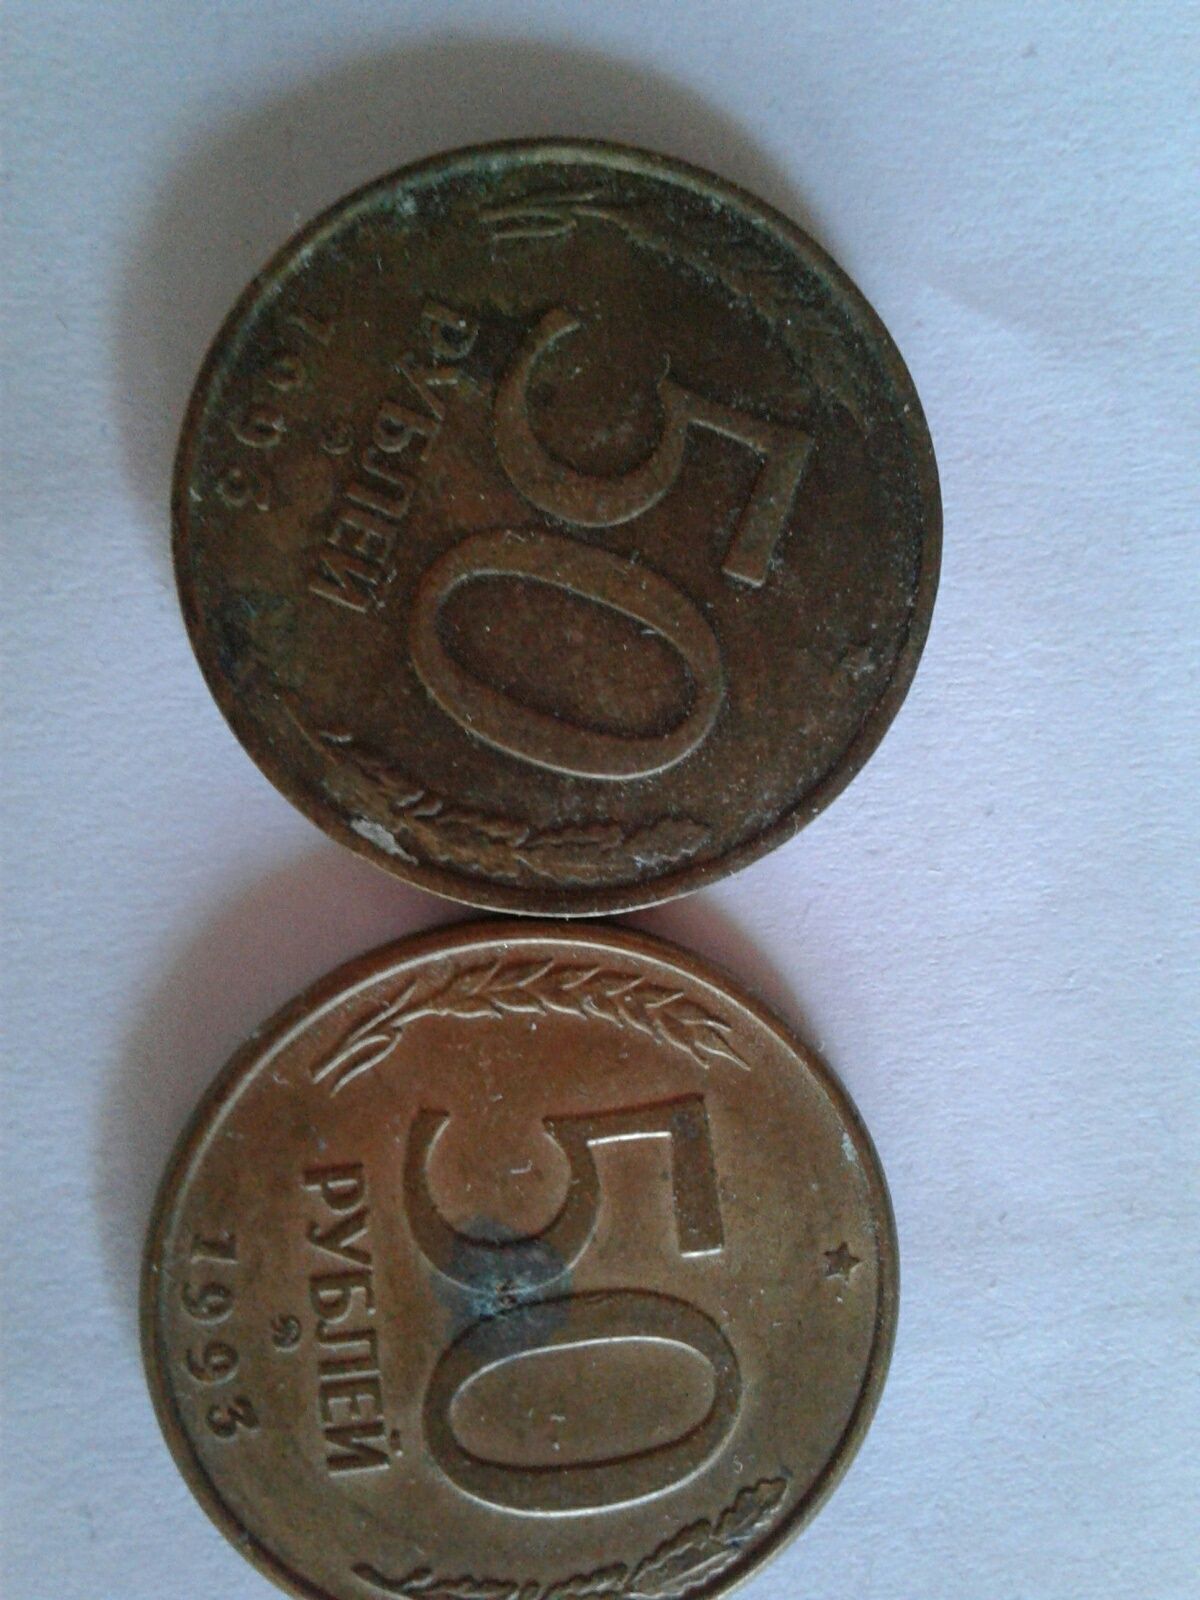 50 рублей 1993 монеты боны купюры